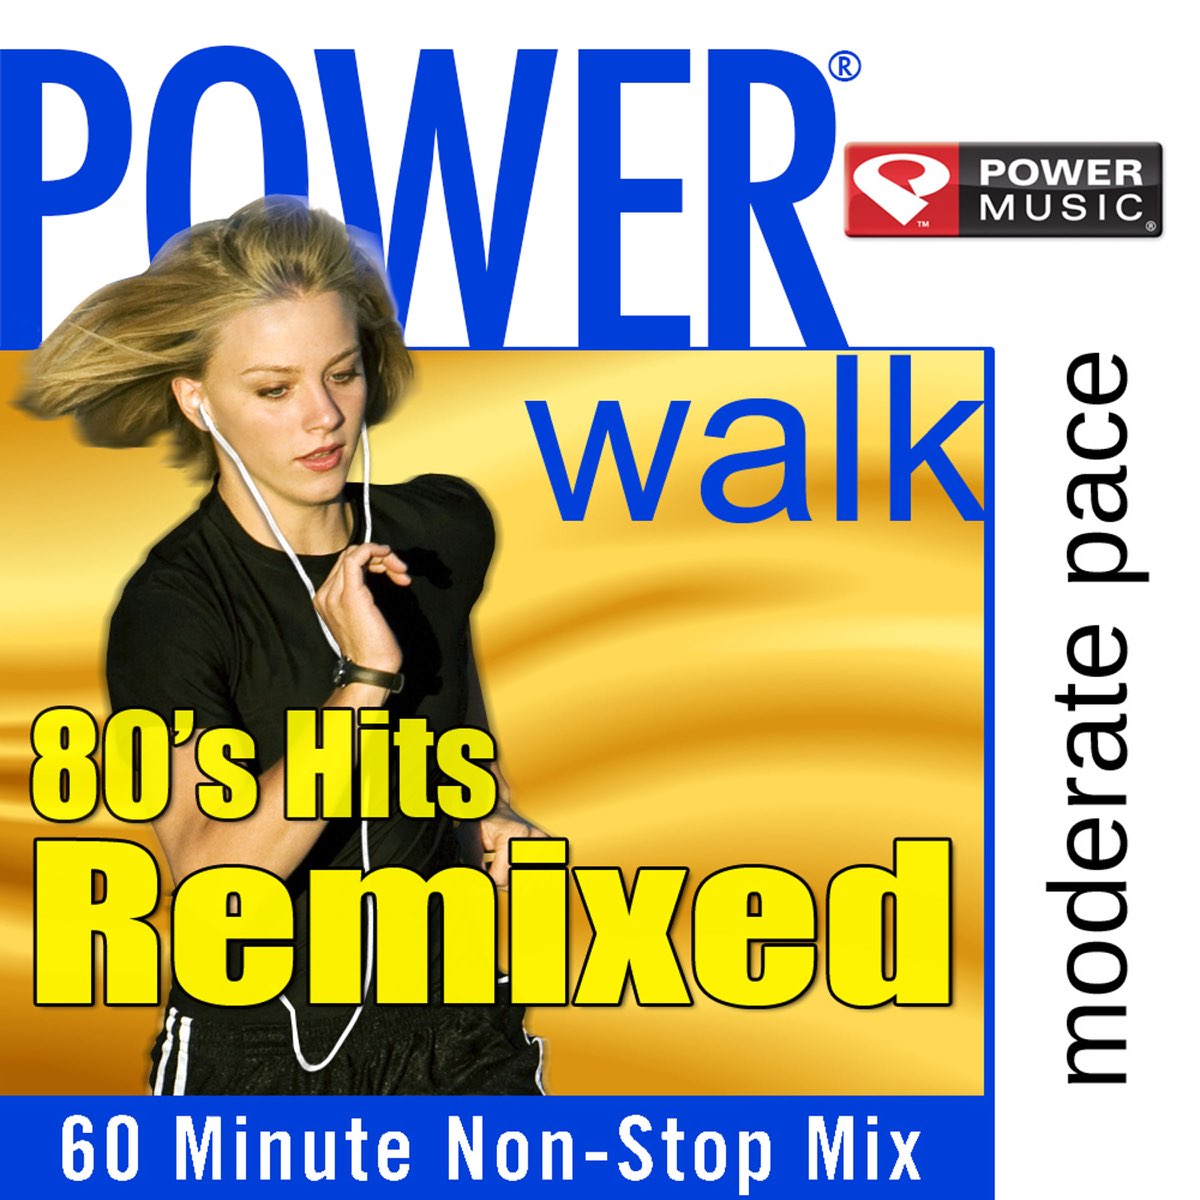 ♫ Power  Rhythmic Hits, Commercial-Free